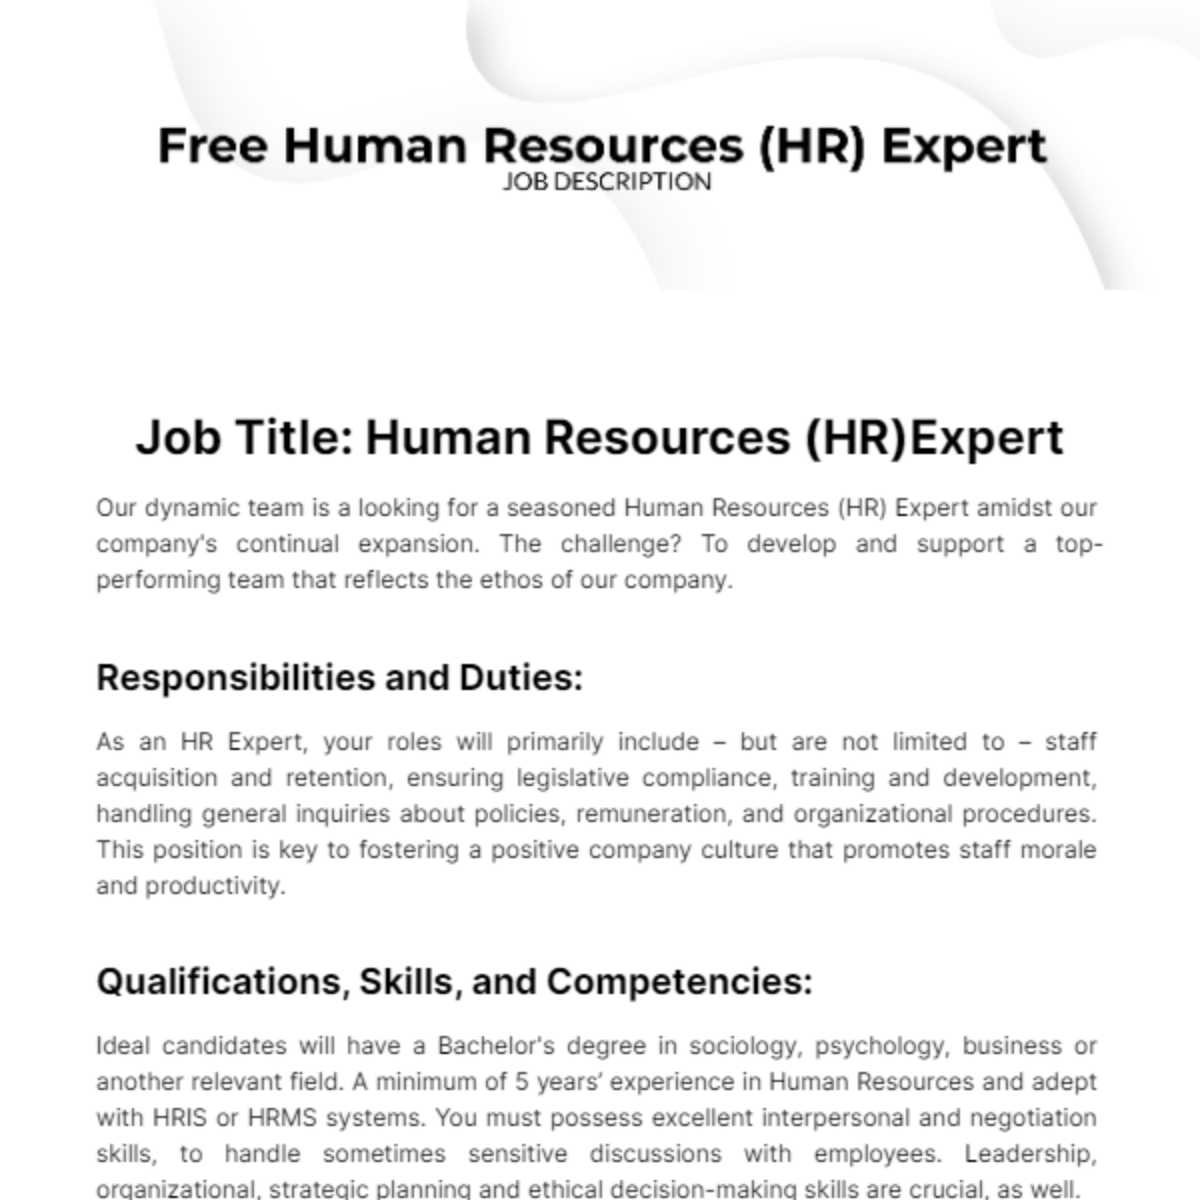 Human Resources (HR) Expert Job Description Template